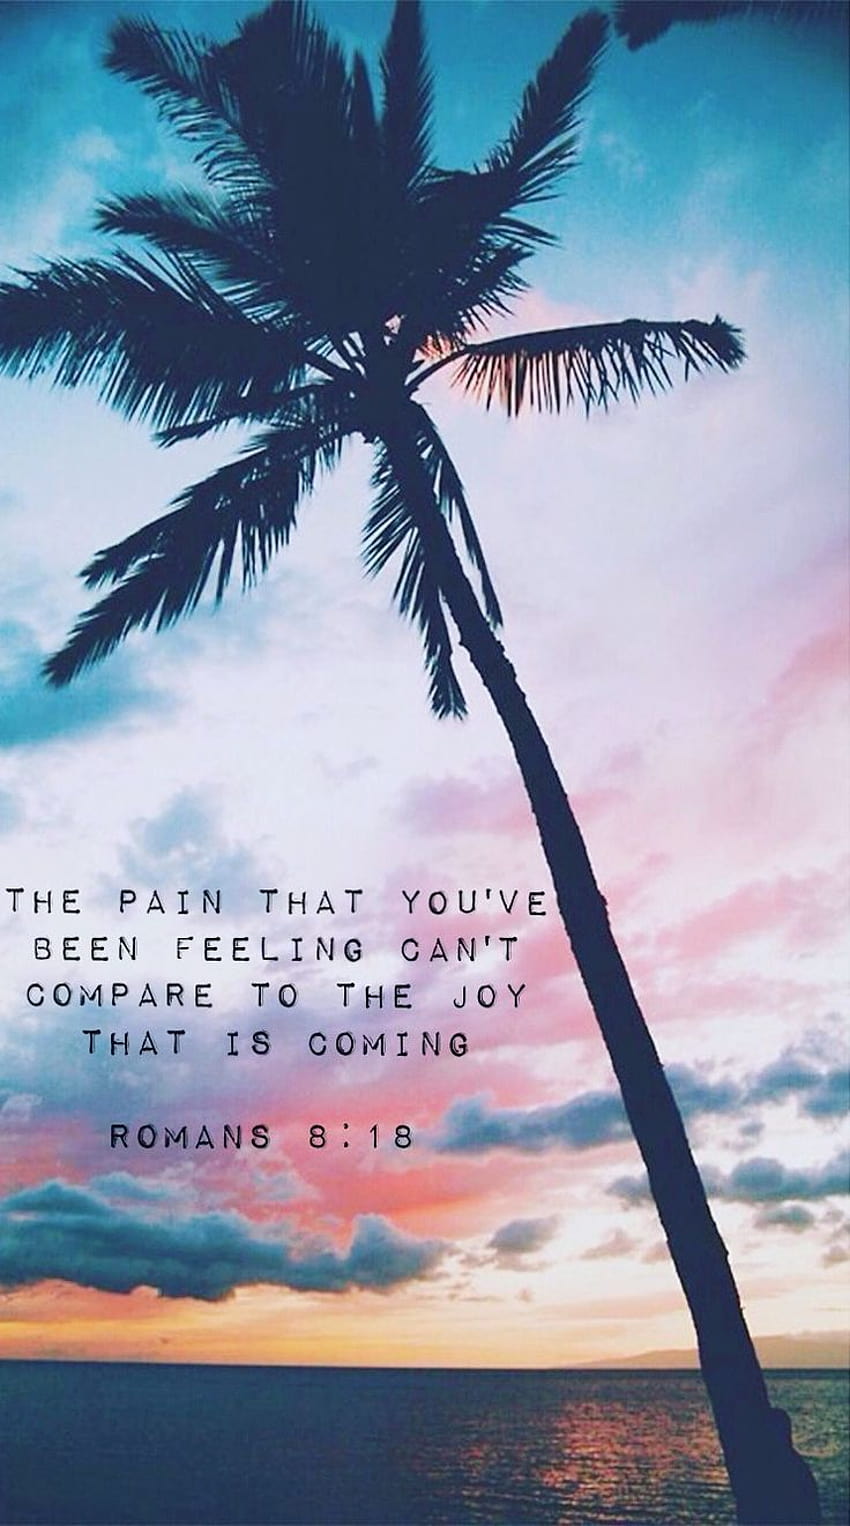 Roma 8:18, ayat Alkitab musim panas wallpaper ponsel HD